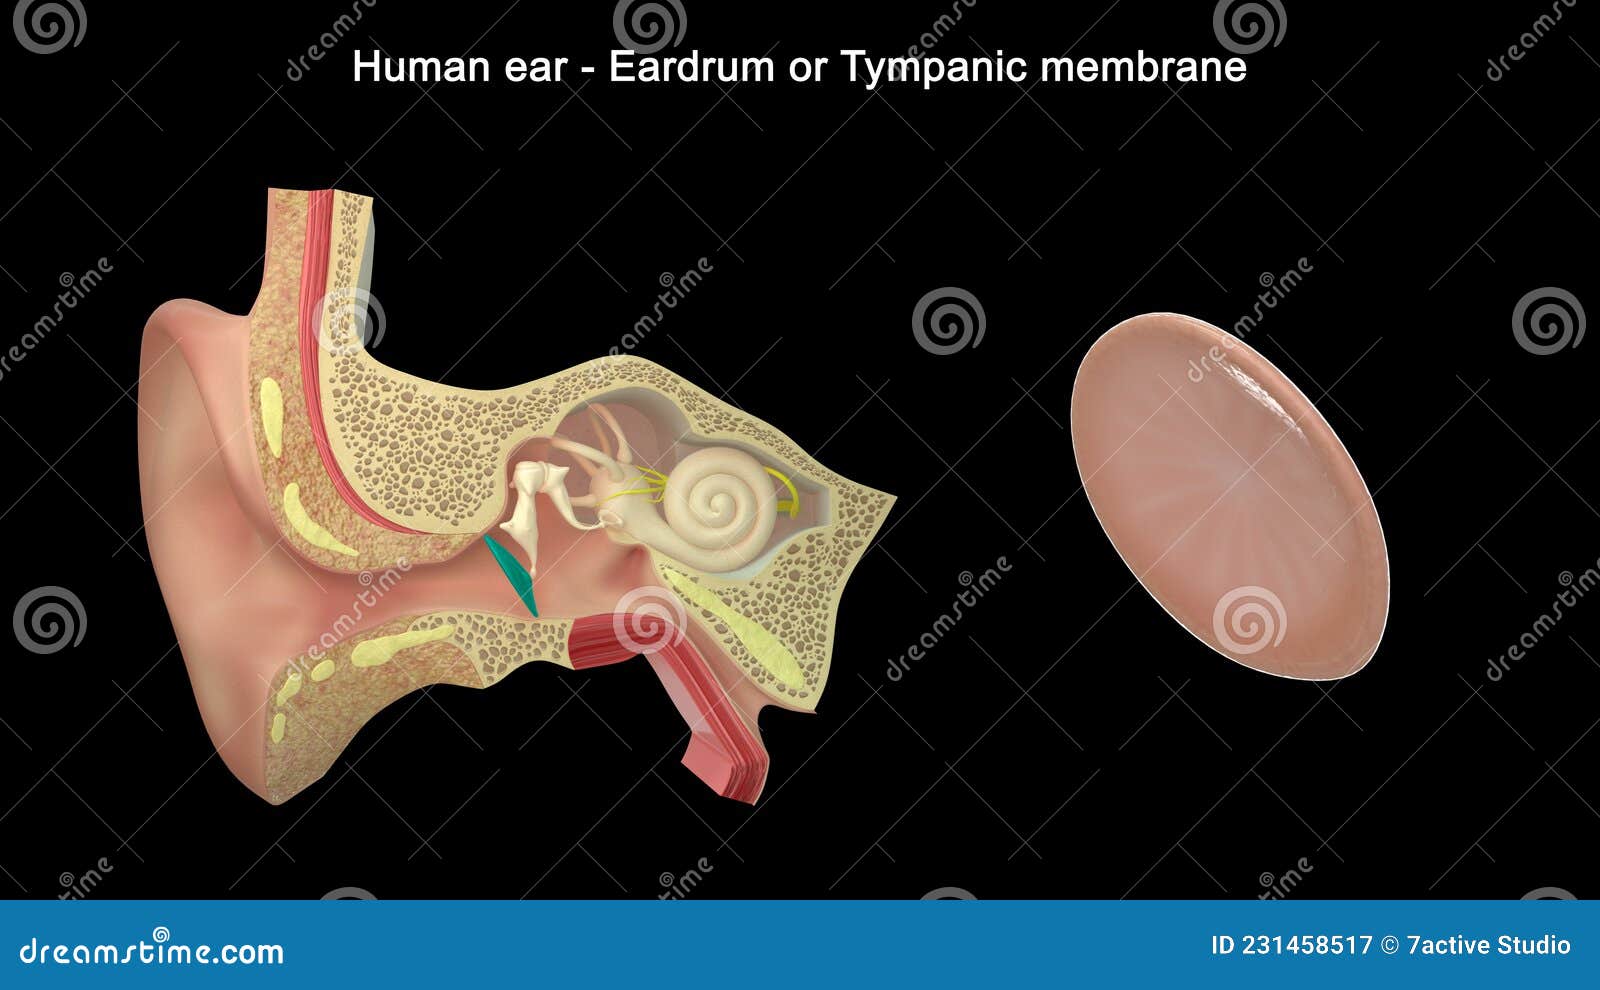 human ear - inner ear parts - eardrum